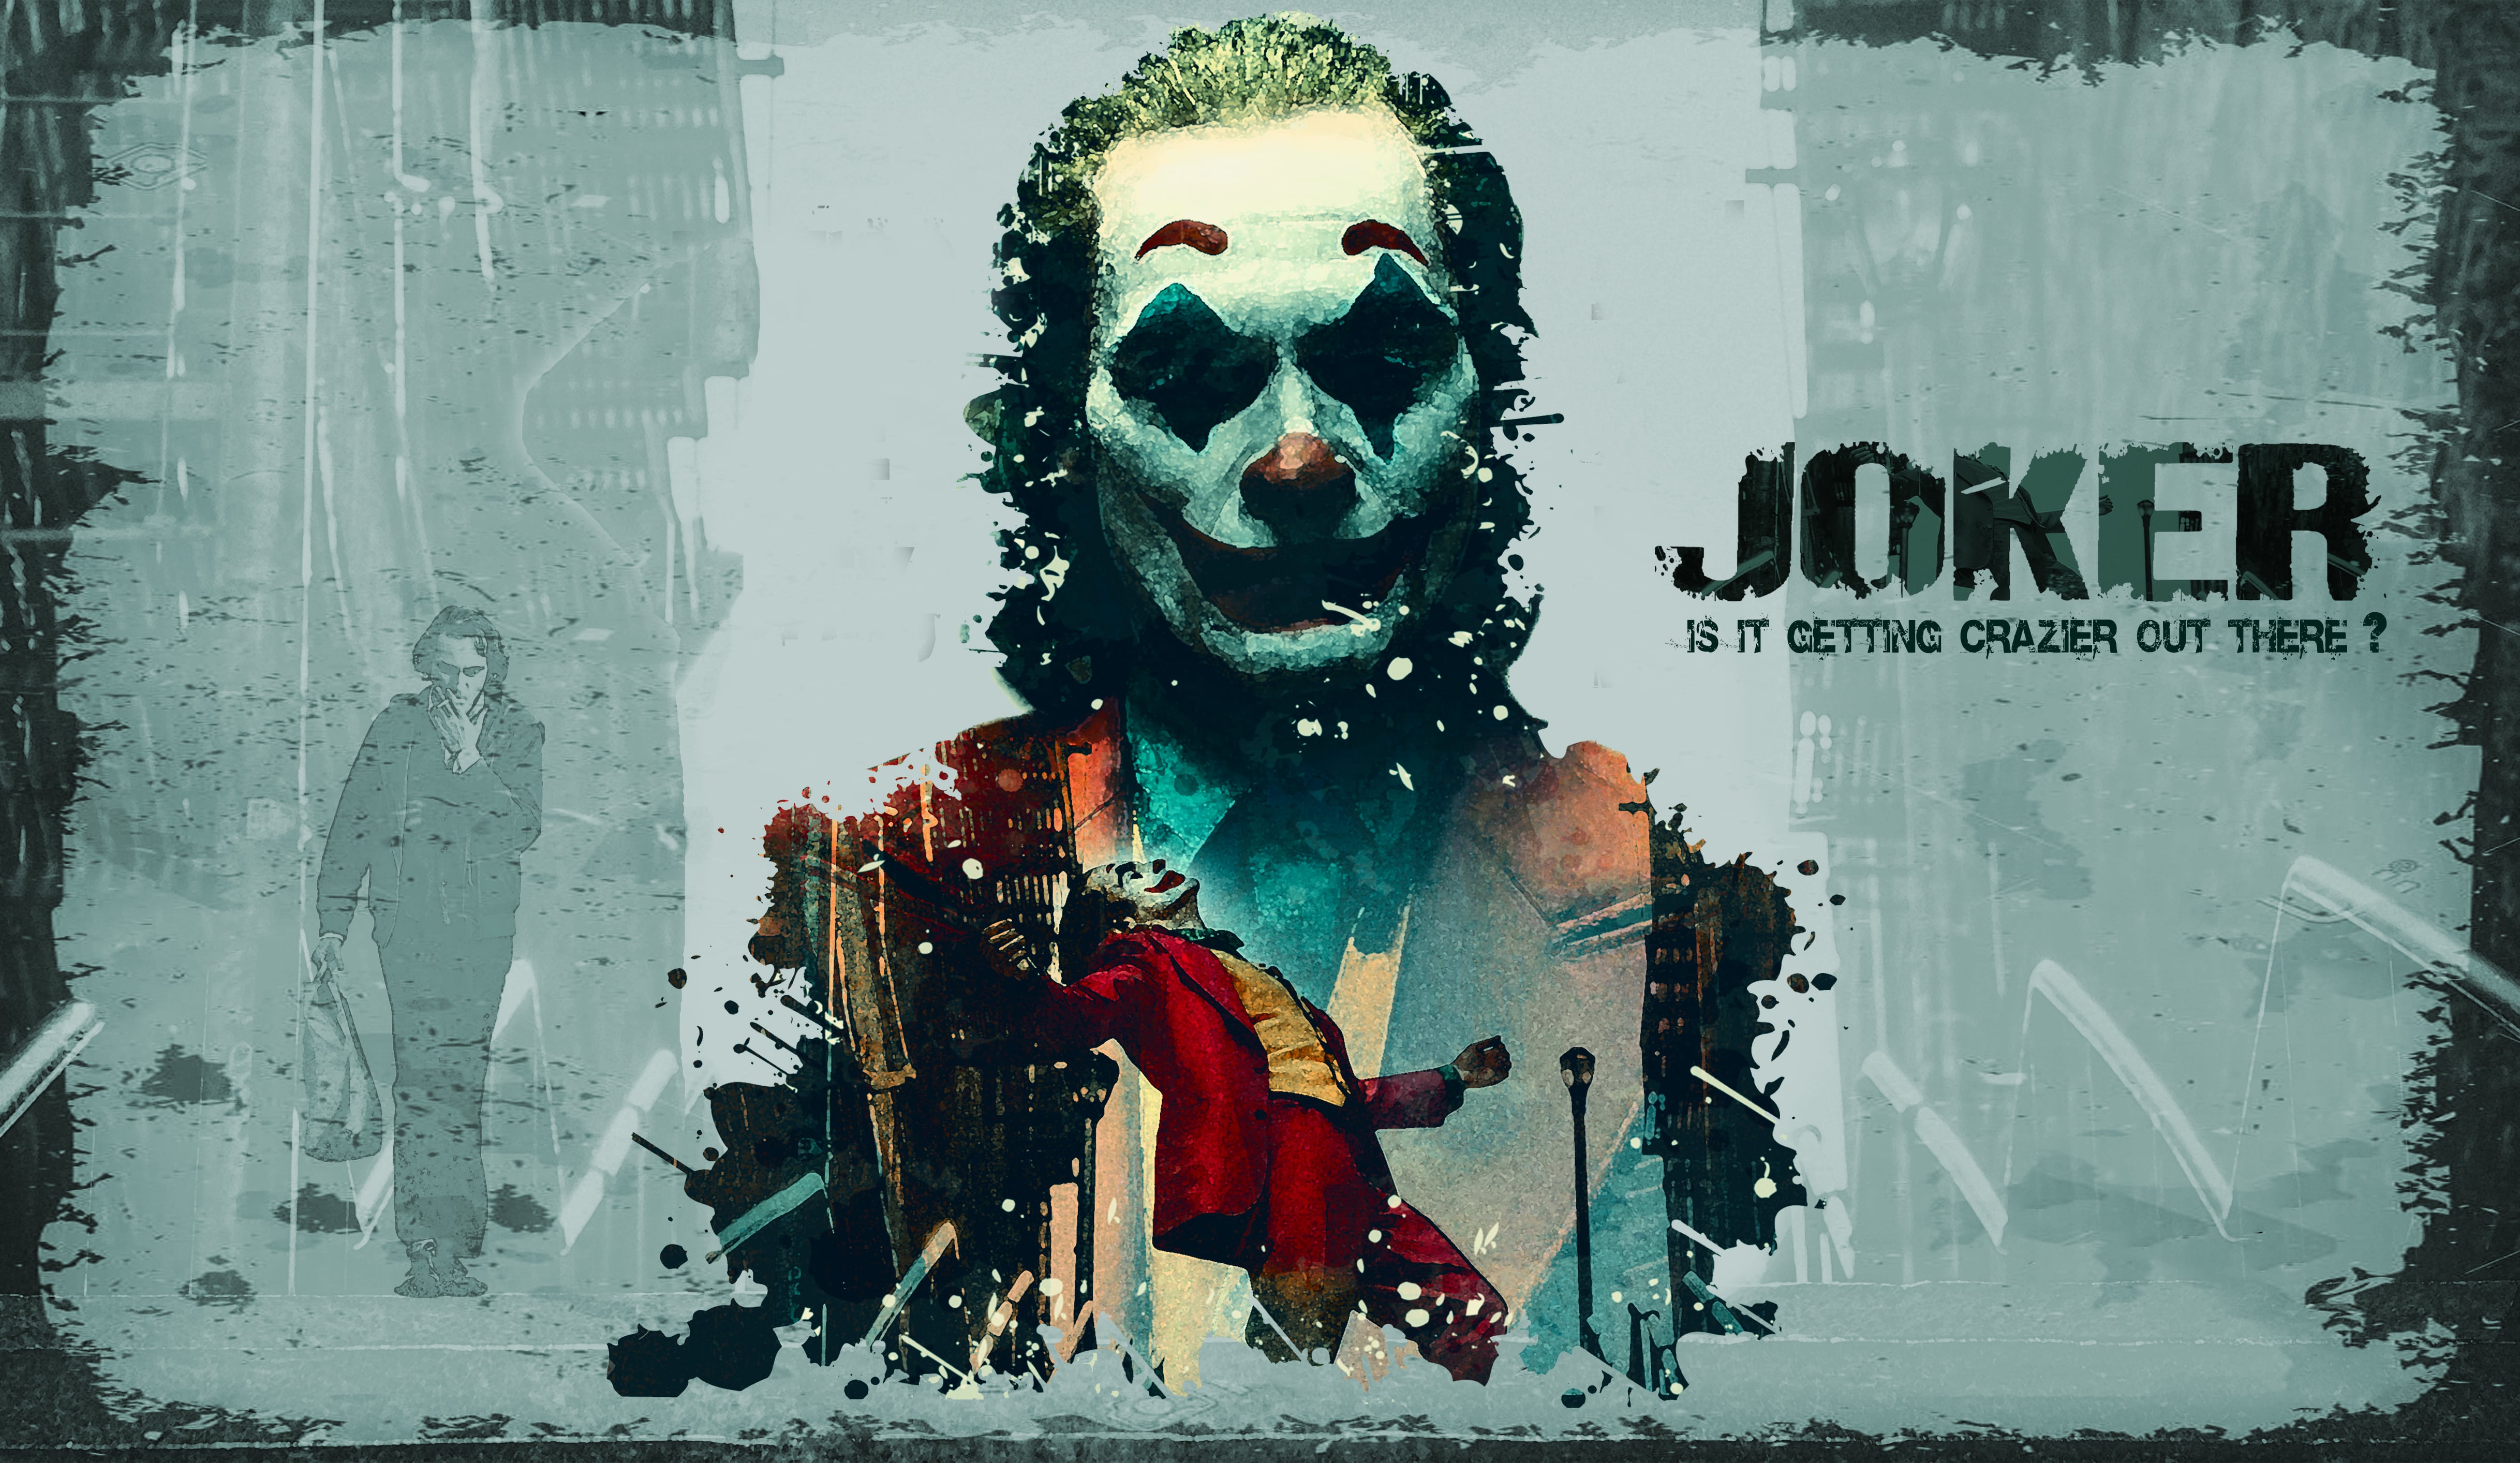 Movie Joker Poster Wallpaper Background Image   uBackgroundcom 4870x2827